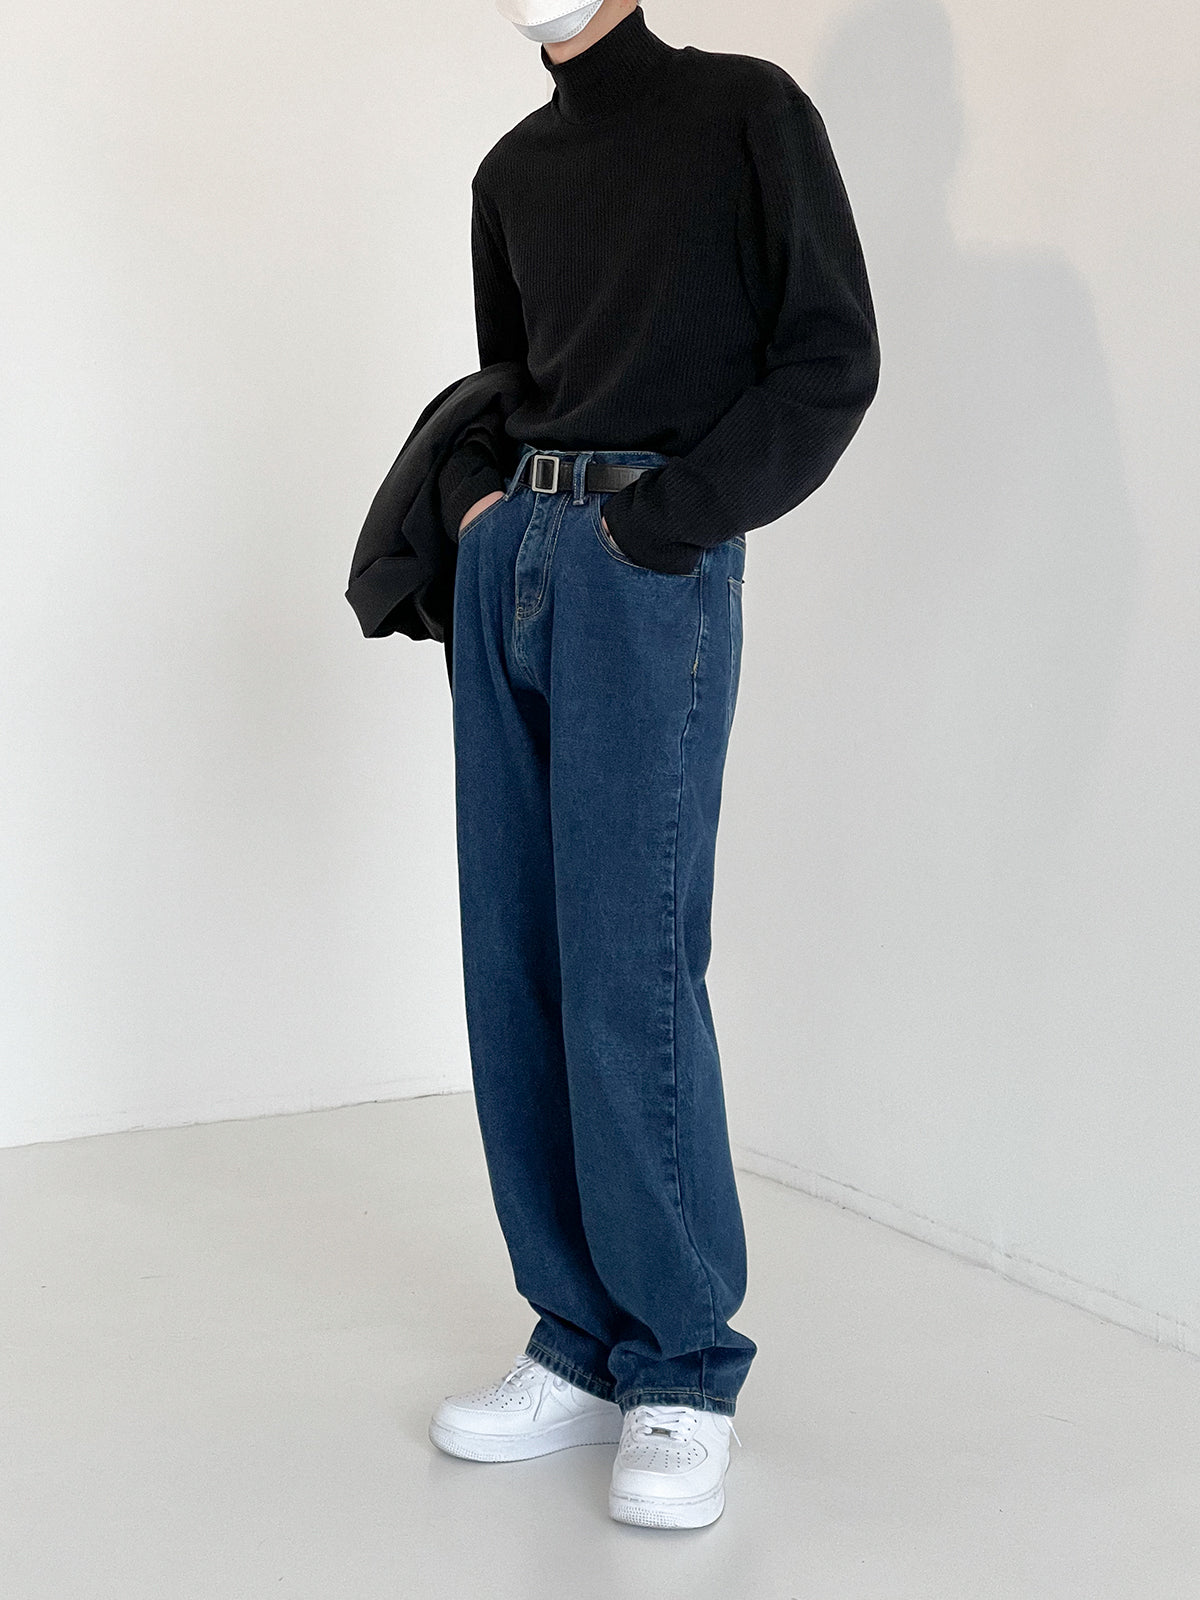 Bonsir 3 Colors Baggy Jeans Men Fashion Casual Pocket Cargo Jeans